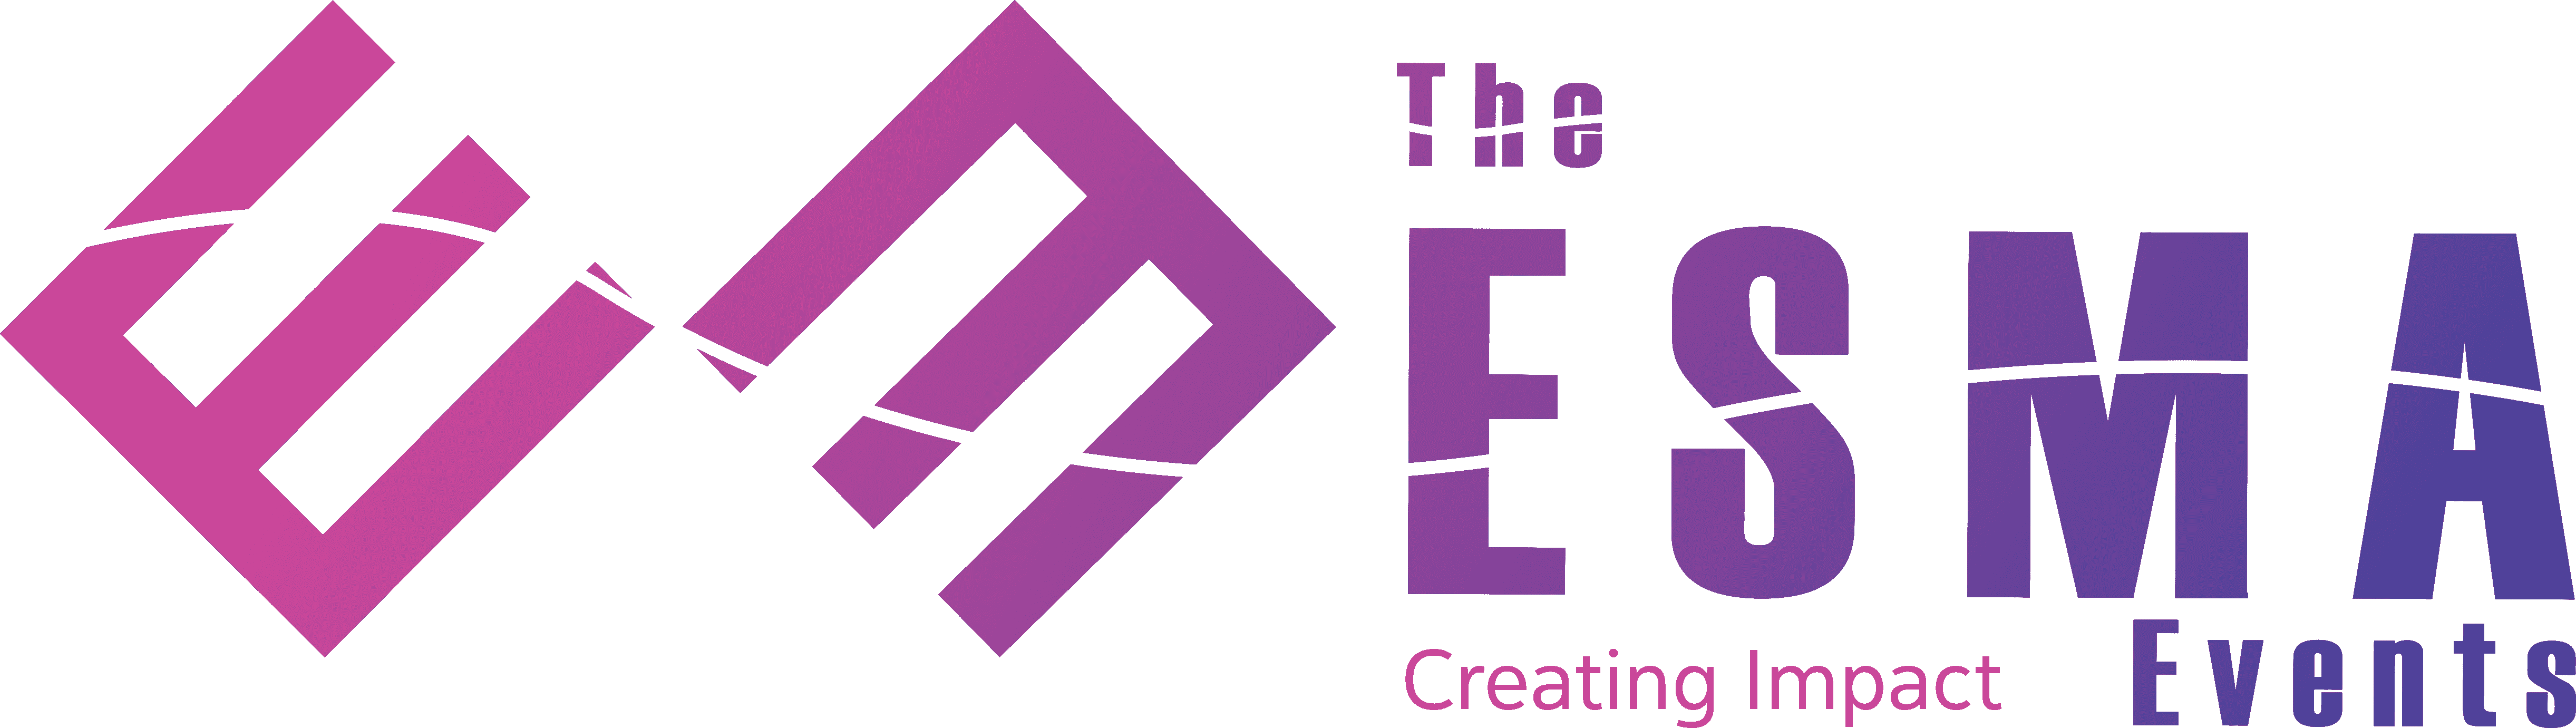 Esma Events Logo